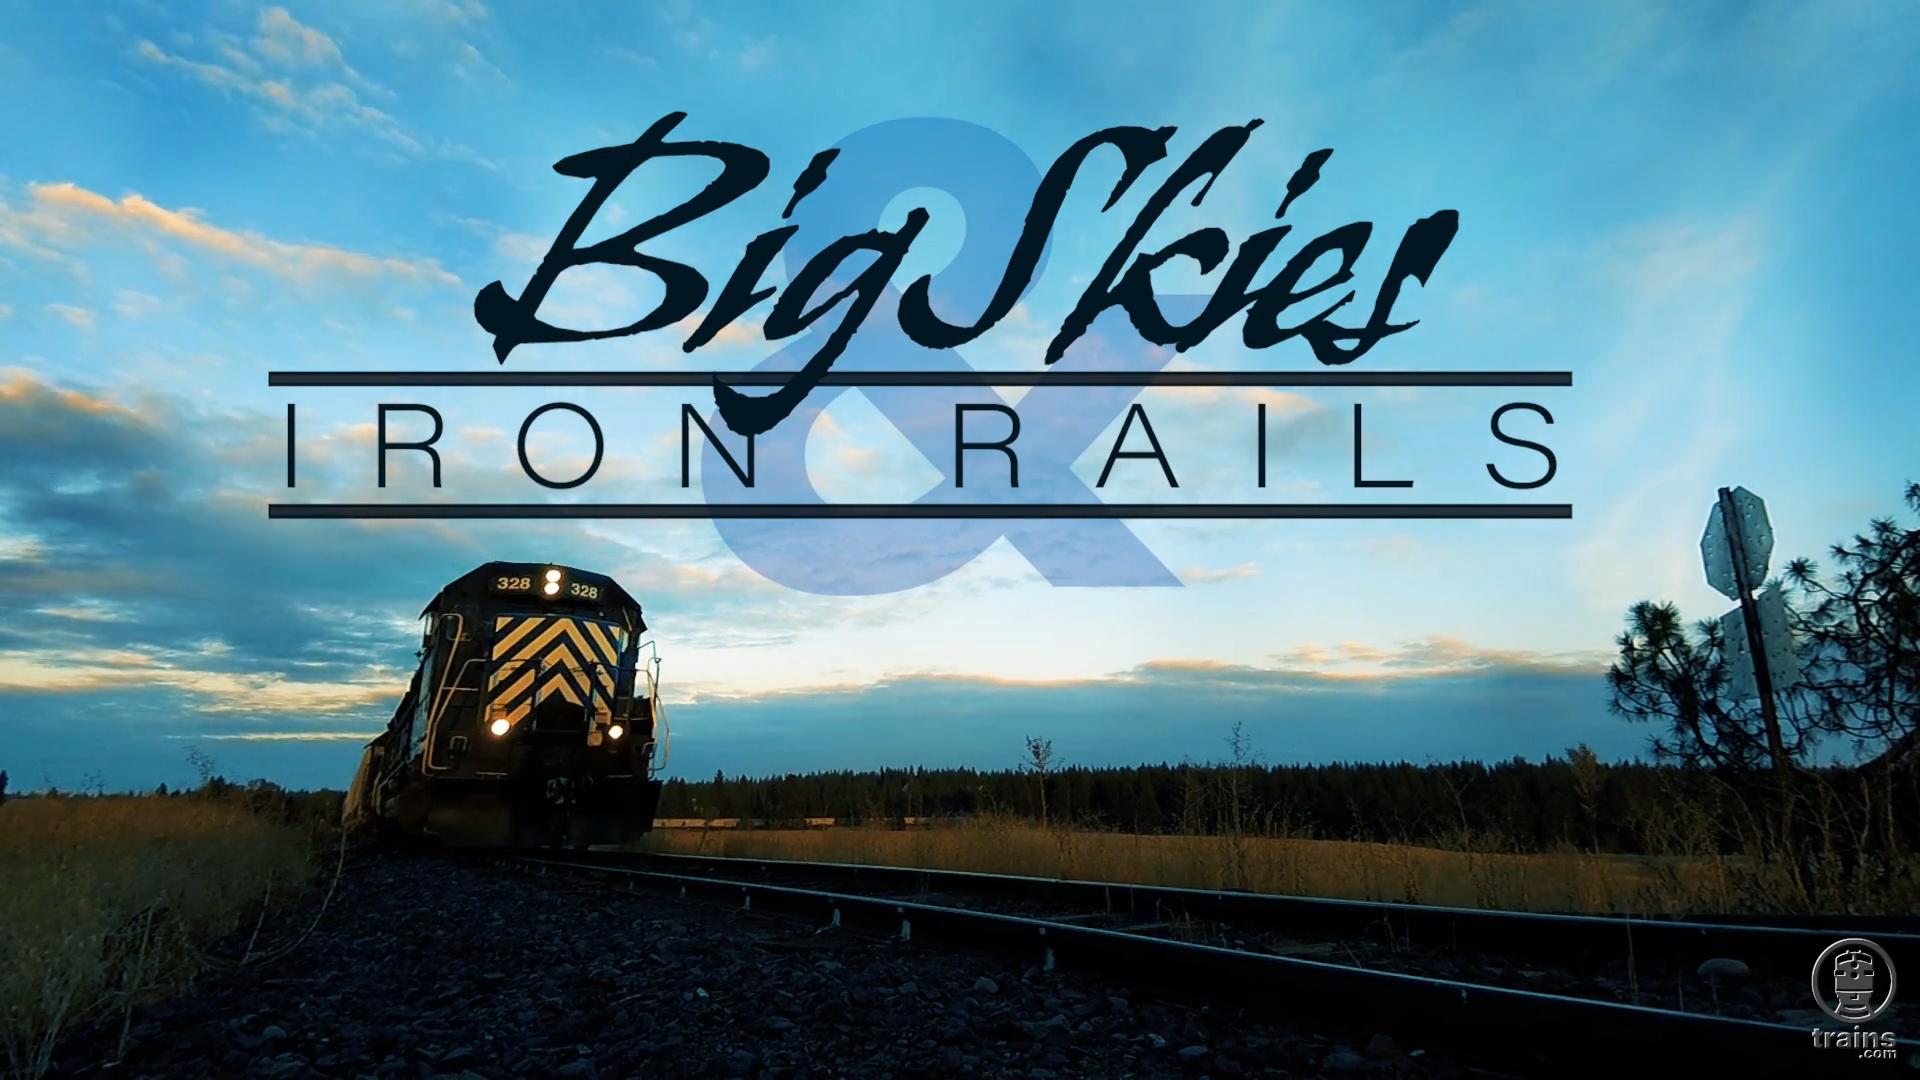 Big Skies & Iron Rails, Montana and Eastern Washington, Episode 1